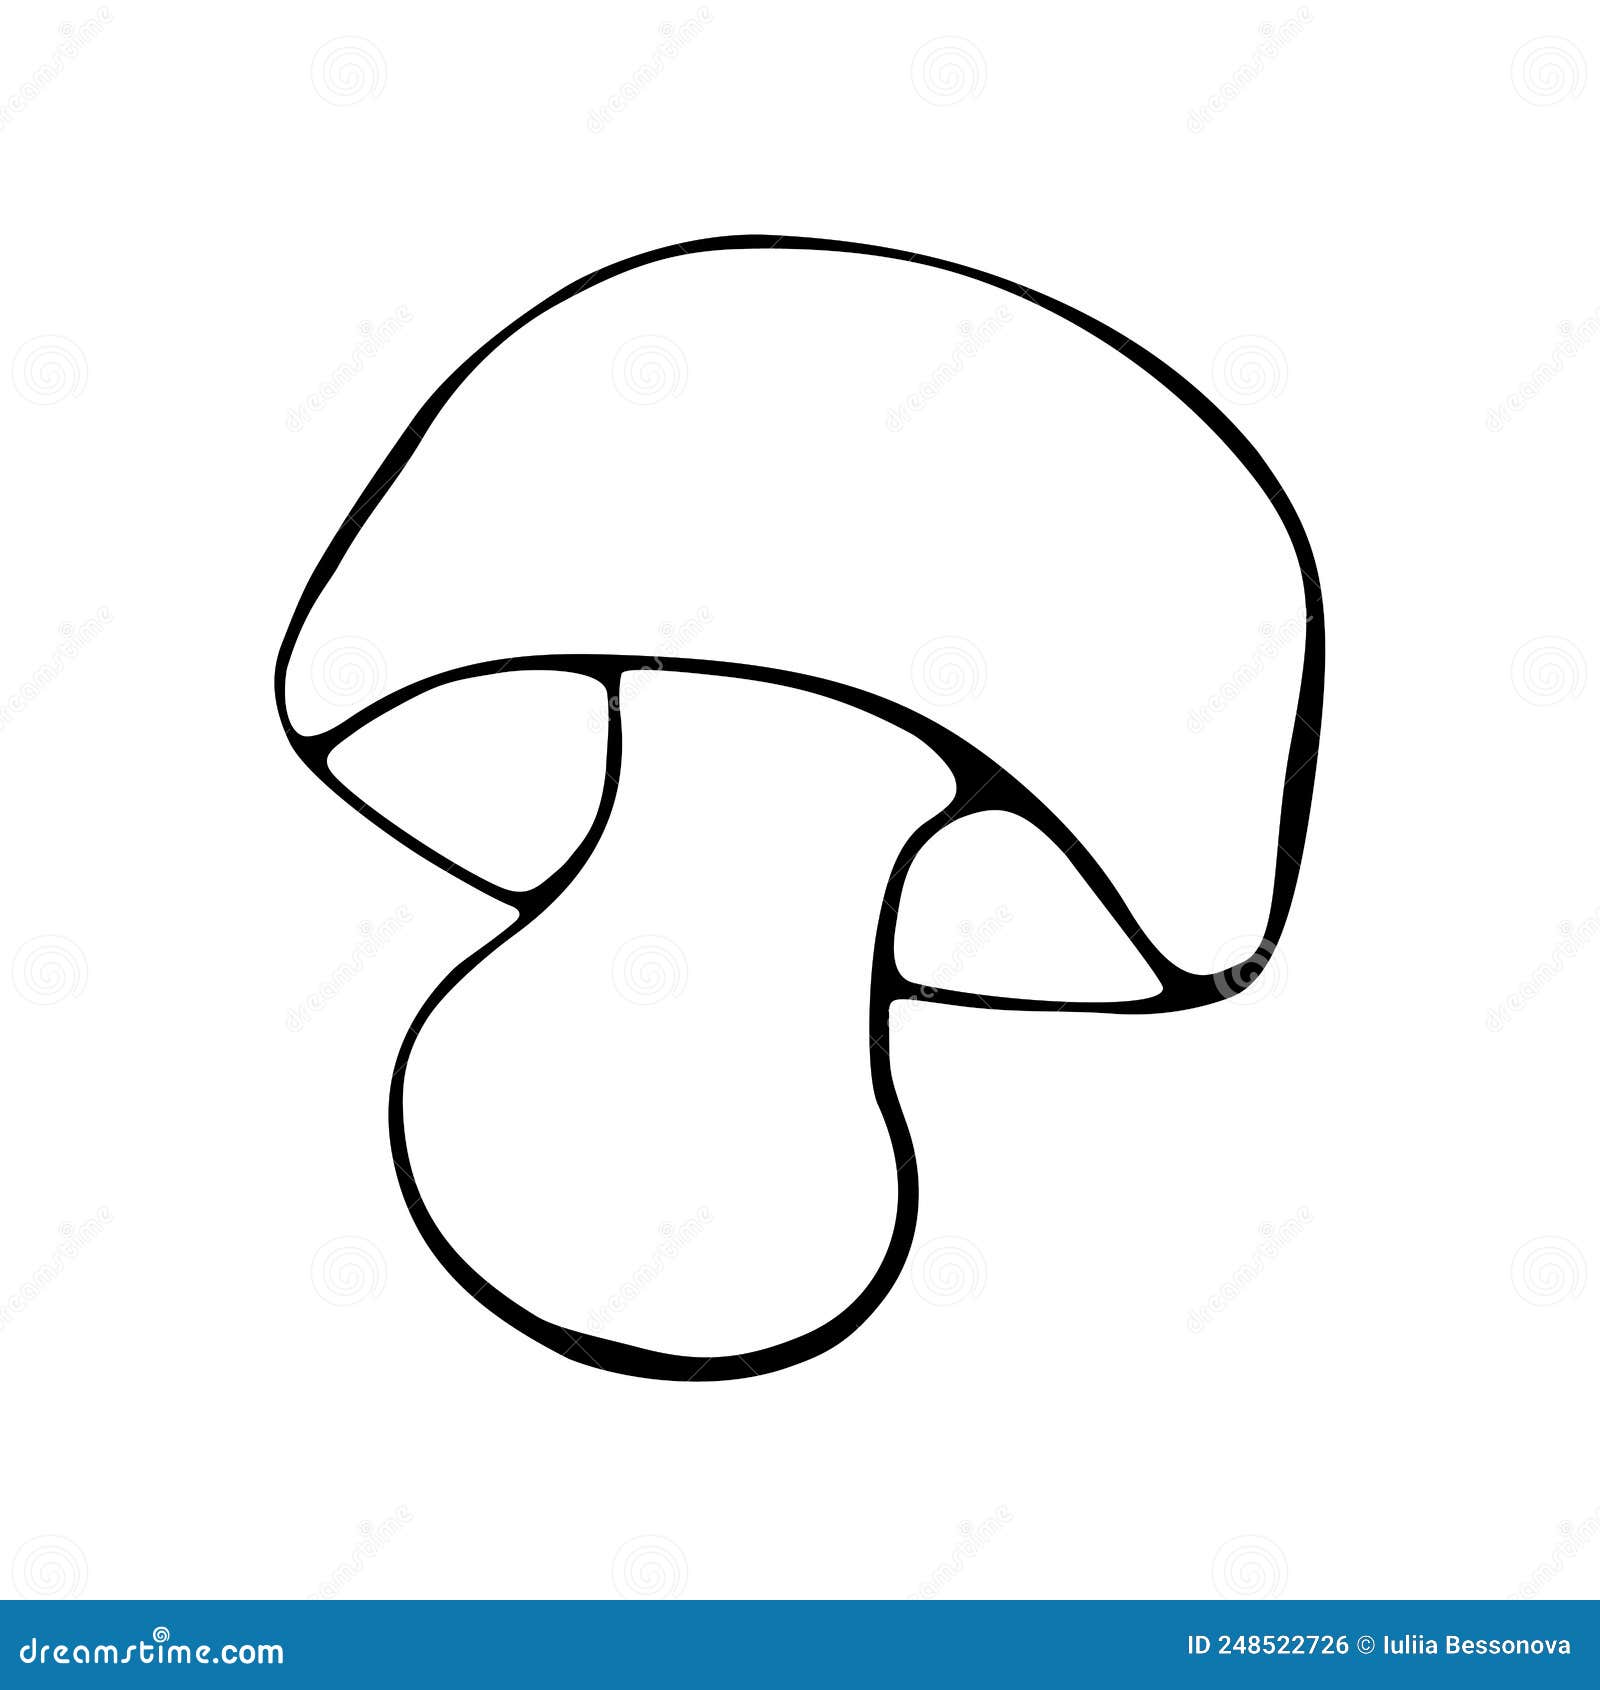 Hand Drawn Vector Mushroom. Illustration for Coloring Book Design ...